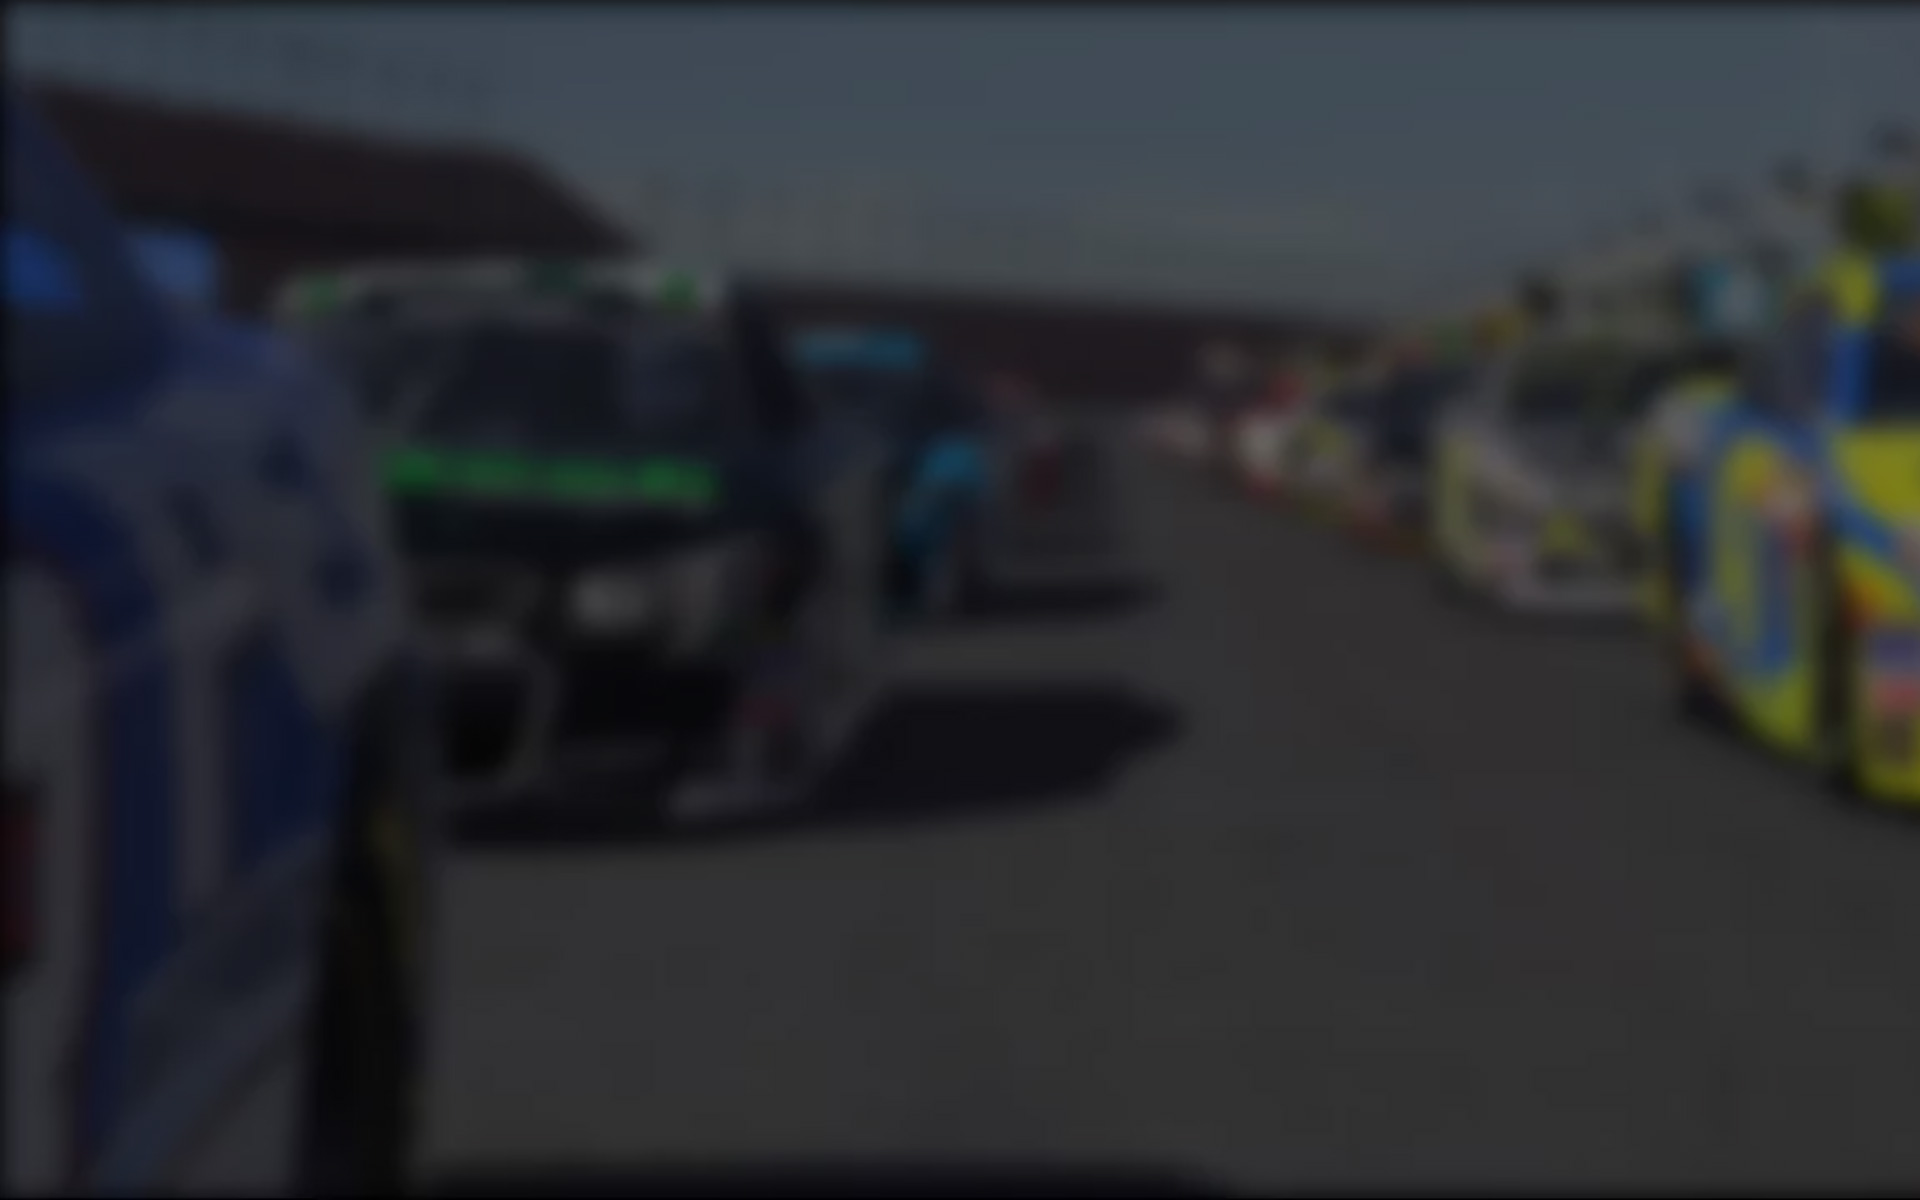 Sim Racing Isn't Gaming, It's for Motorsport Pros! – National